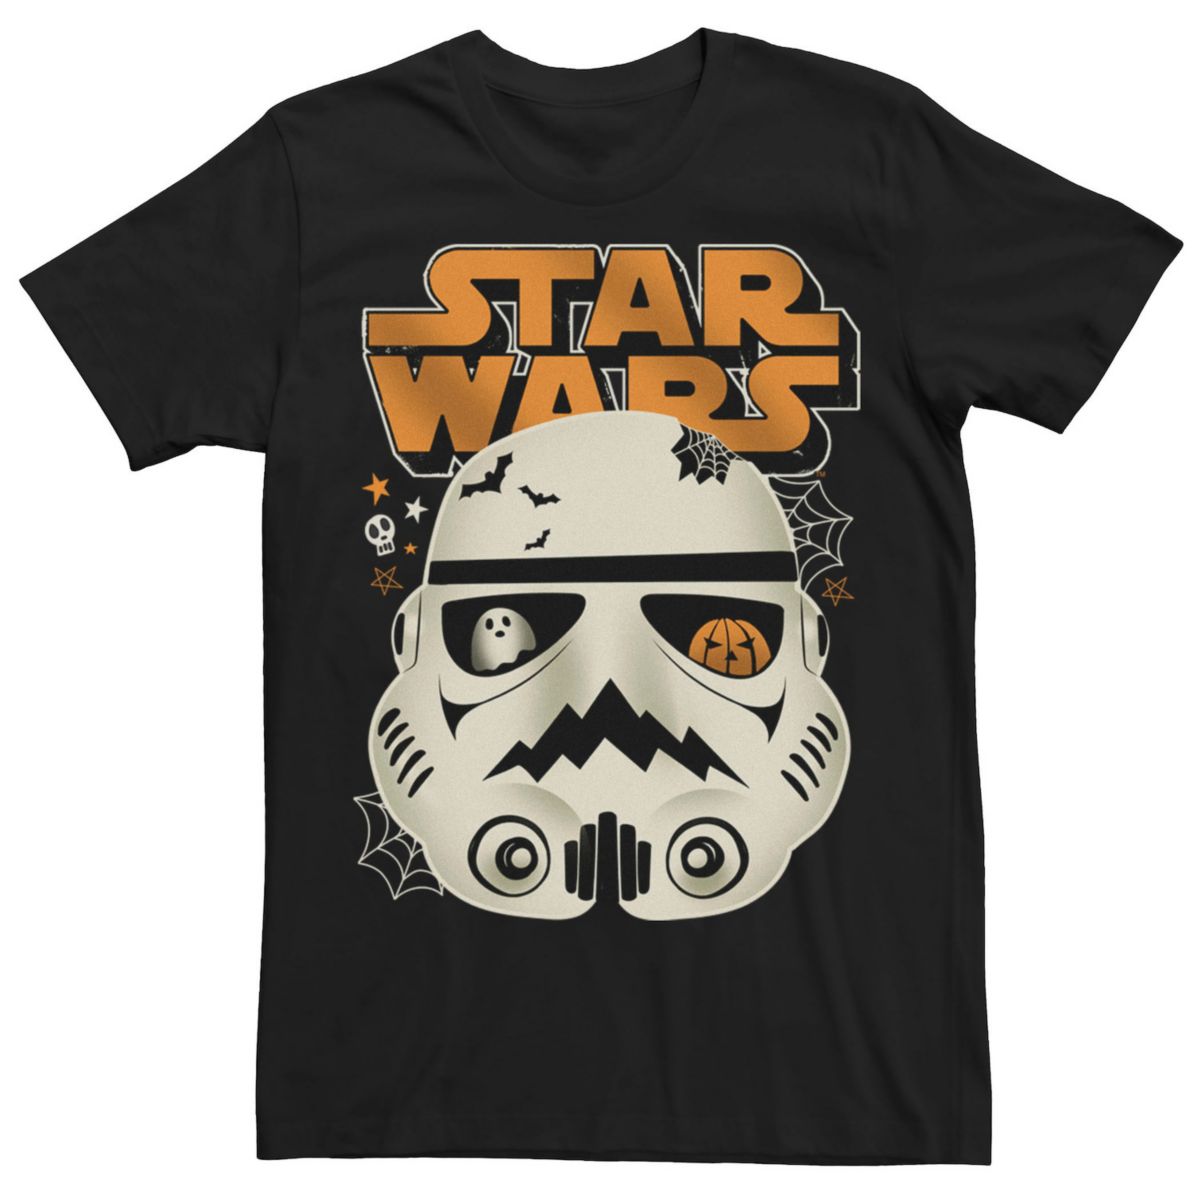 Мужская футболка с логотипом Star Wars Trooper Spooky Helmet Star Wars